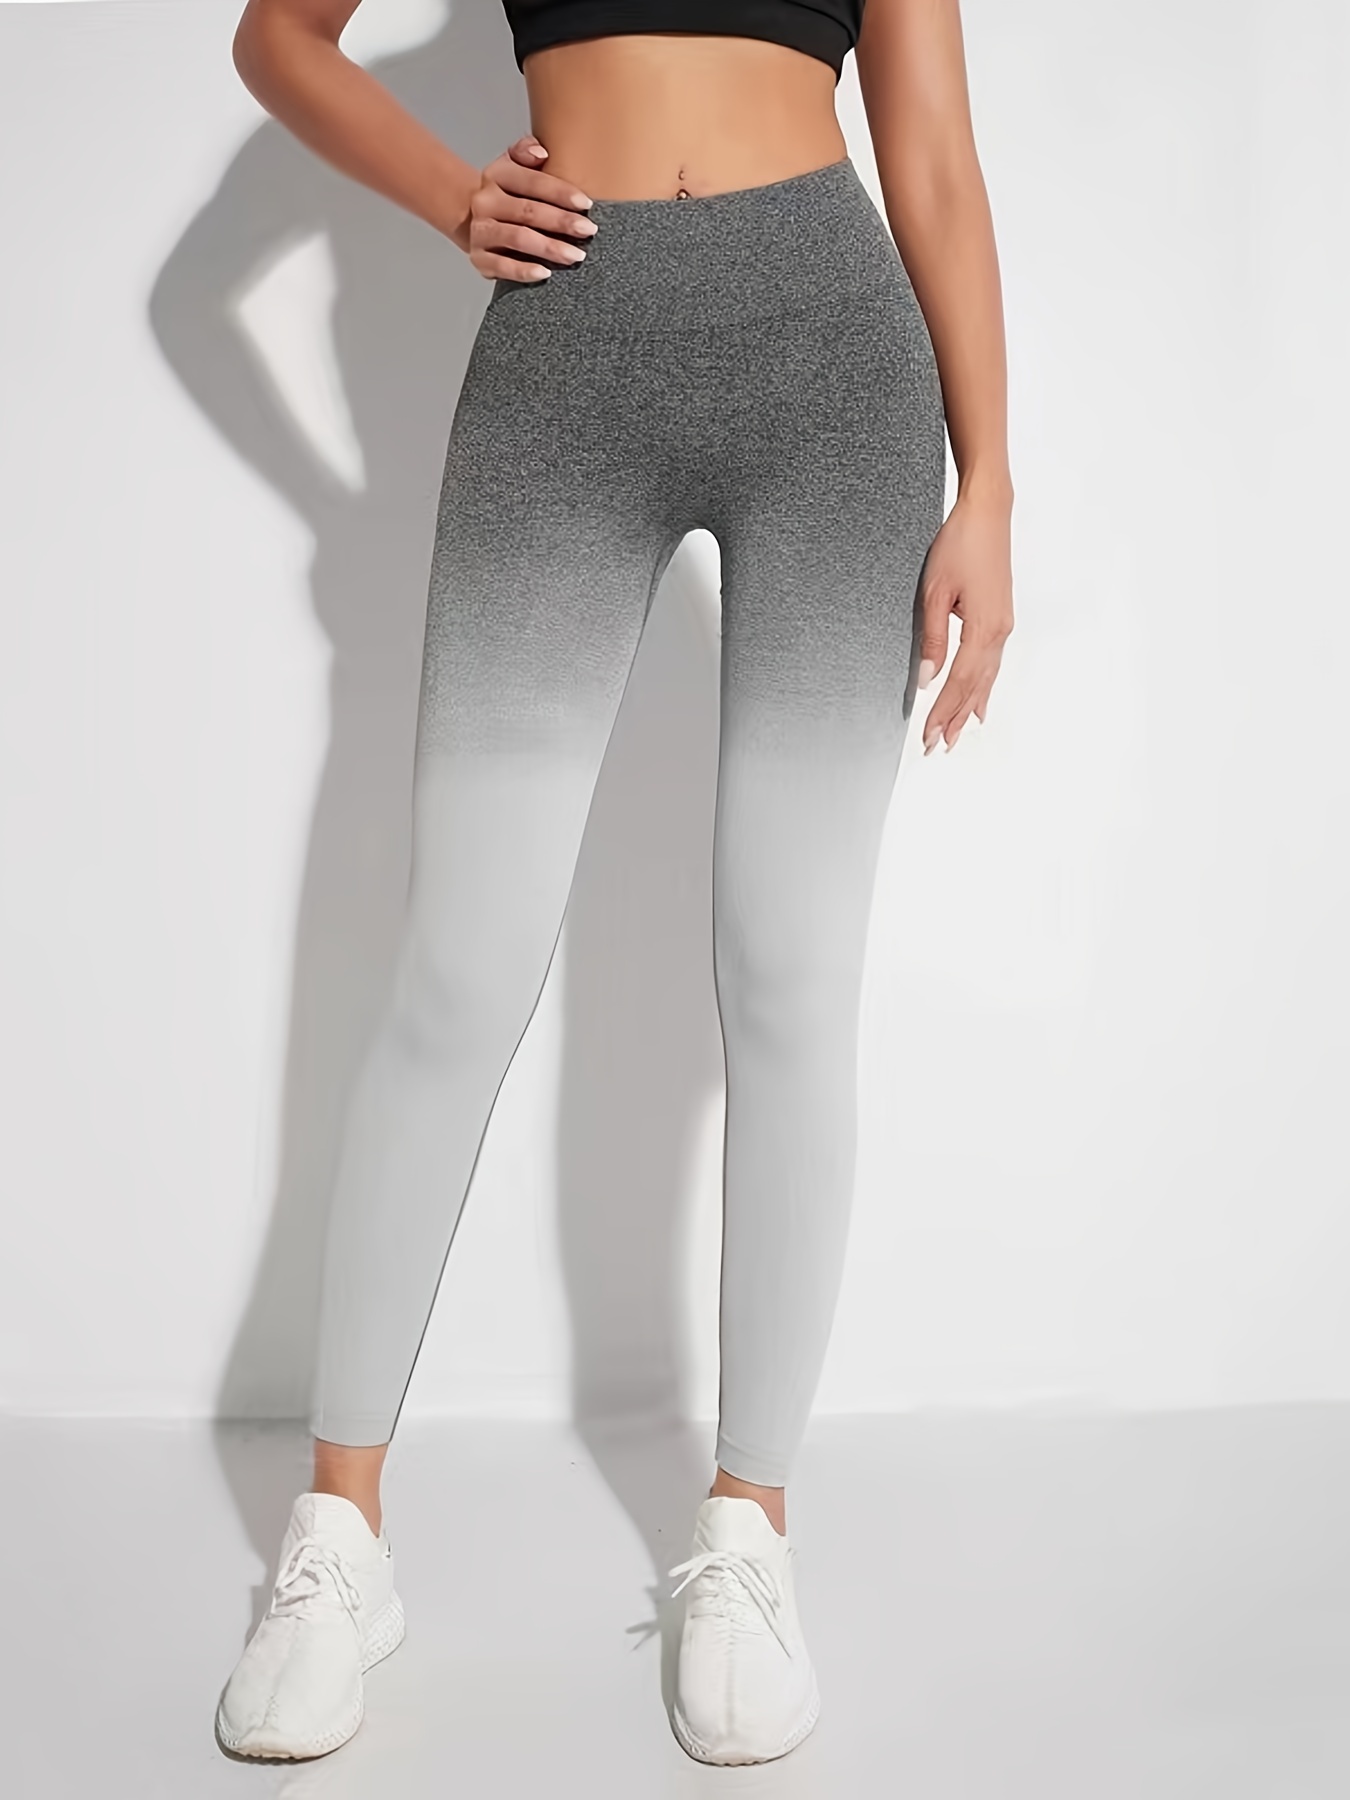 Textured Gym/Yoga Leggings - Gray/Grey to White Fade ⭐ Leggings